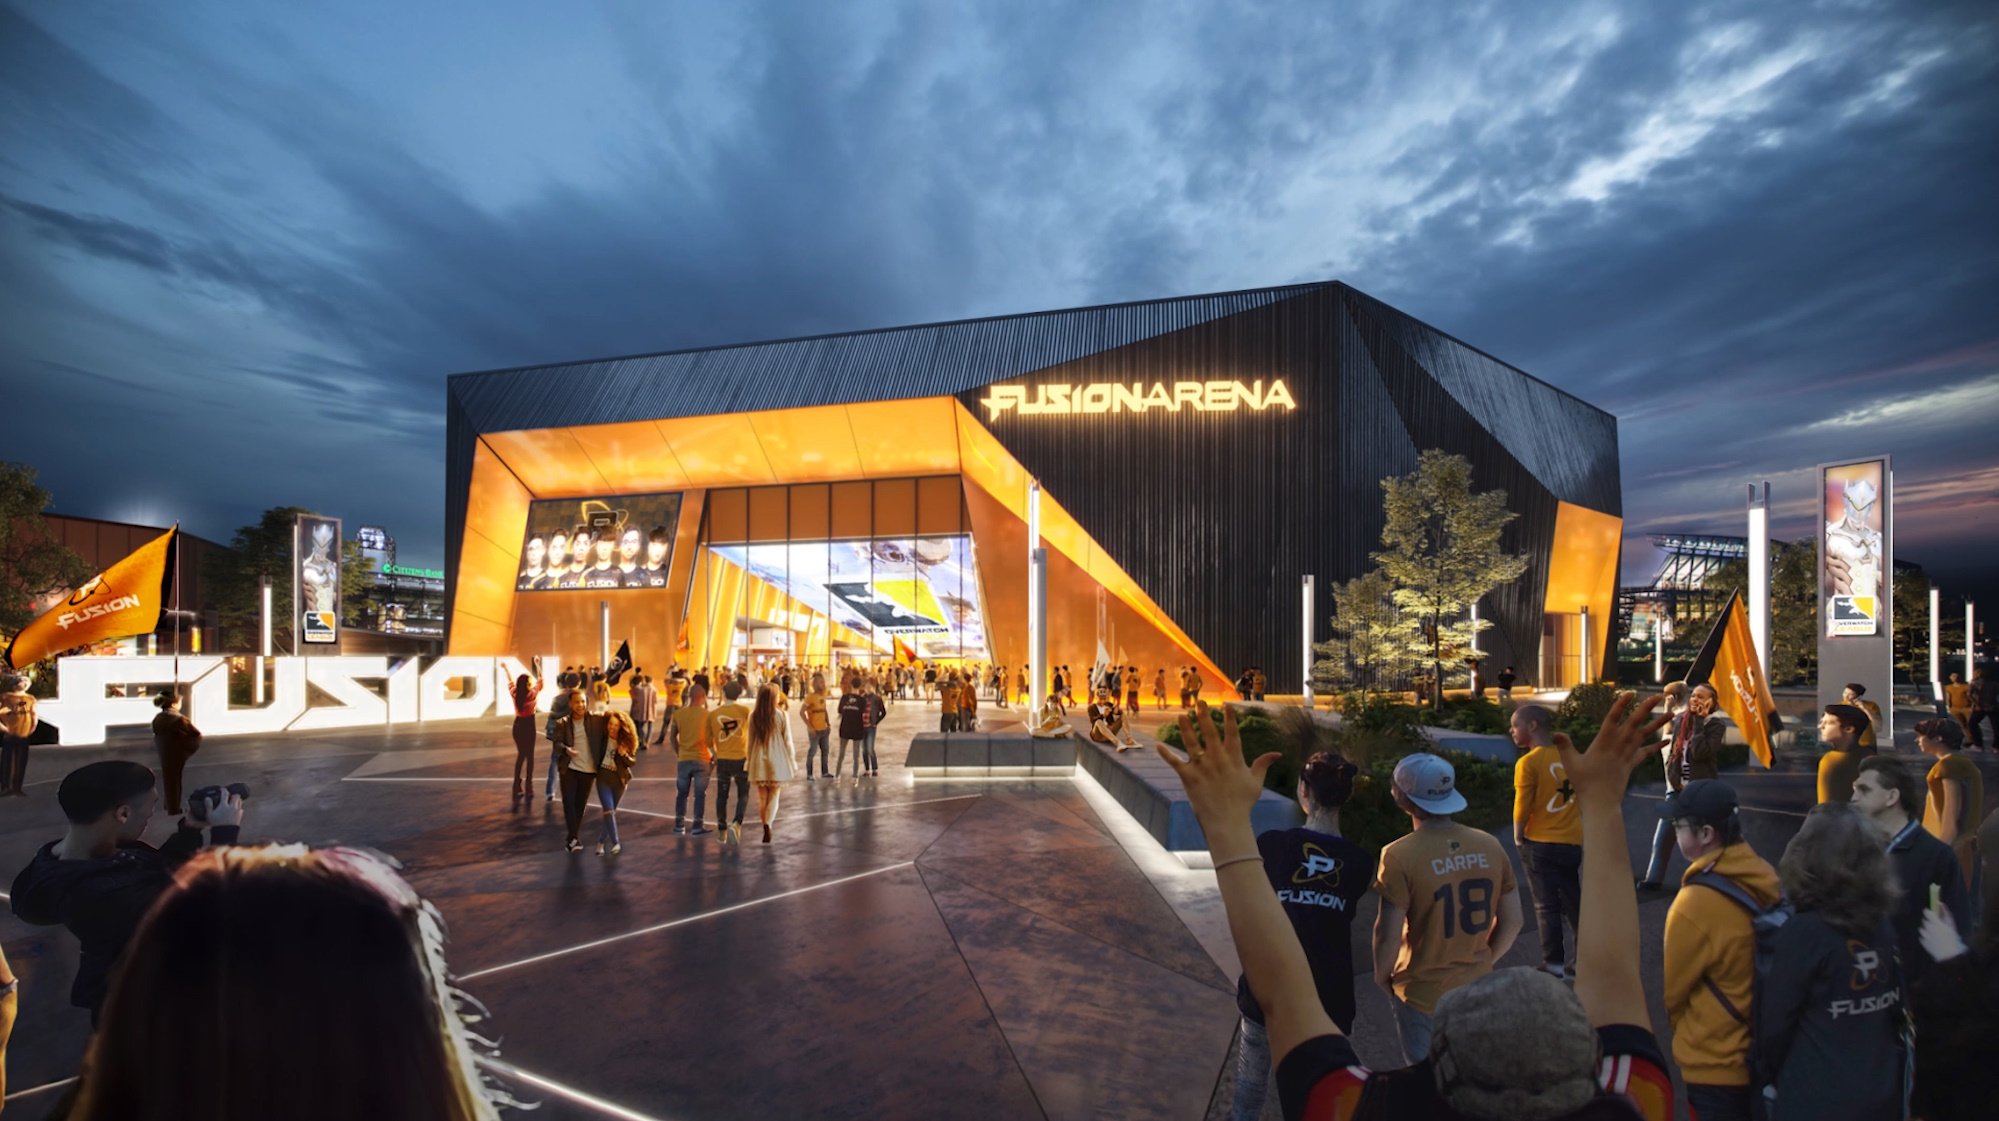 Comcast Spectacor to build 50M 'Fusion Arena' for